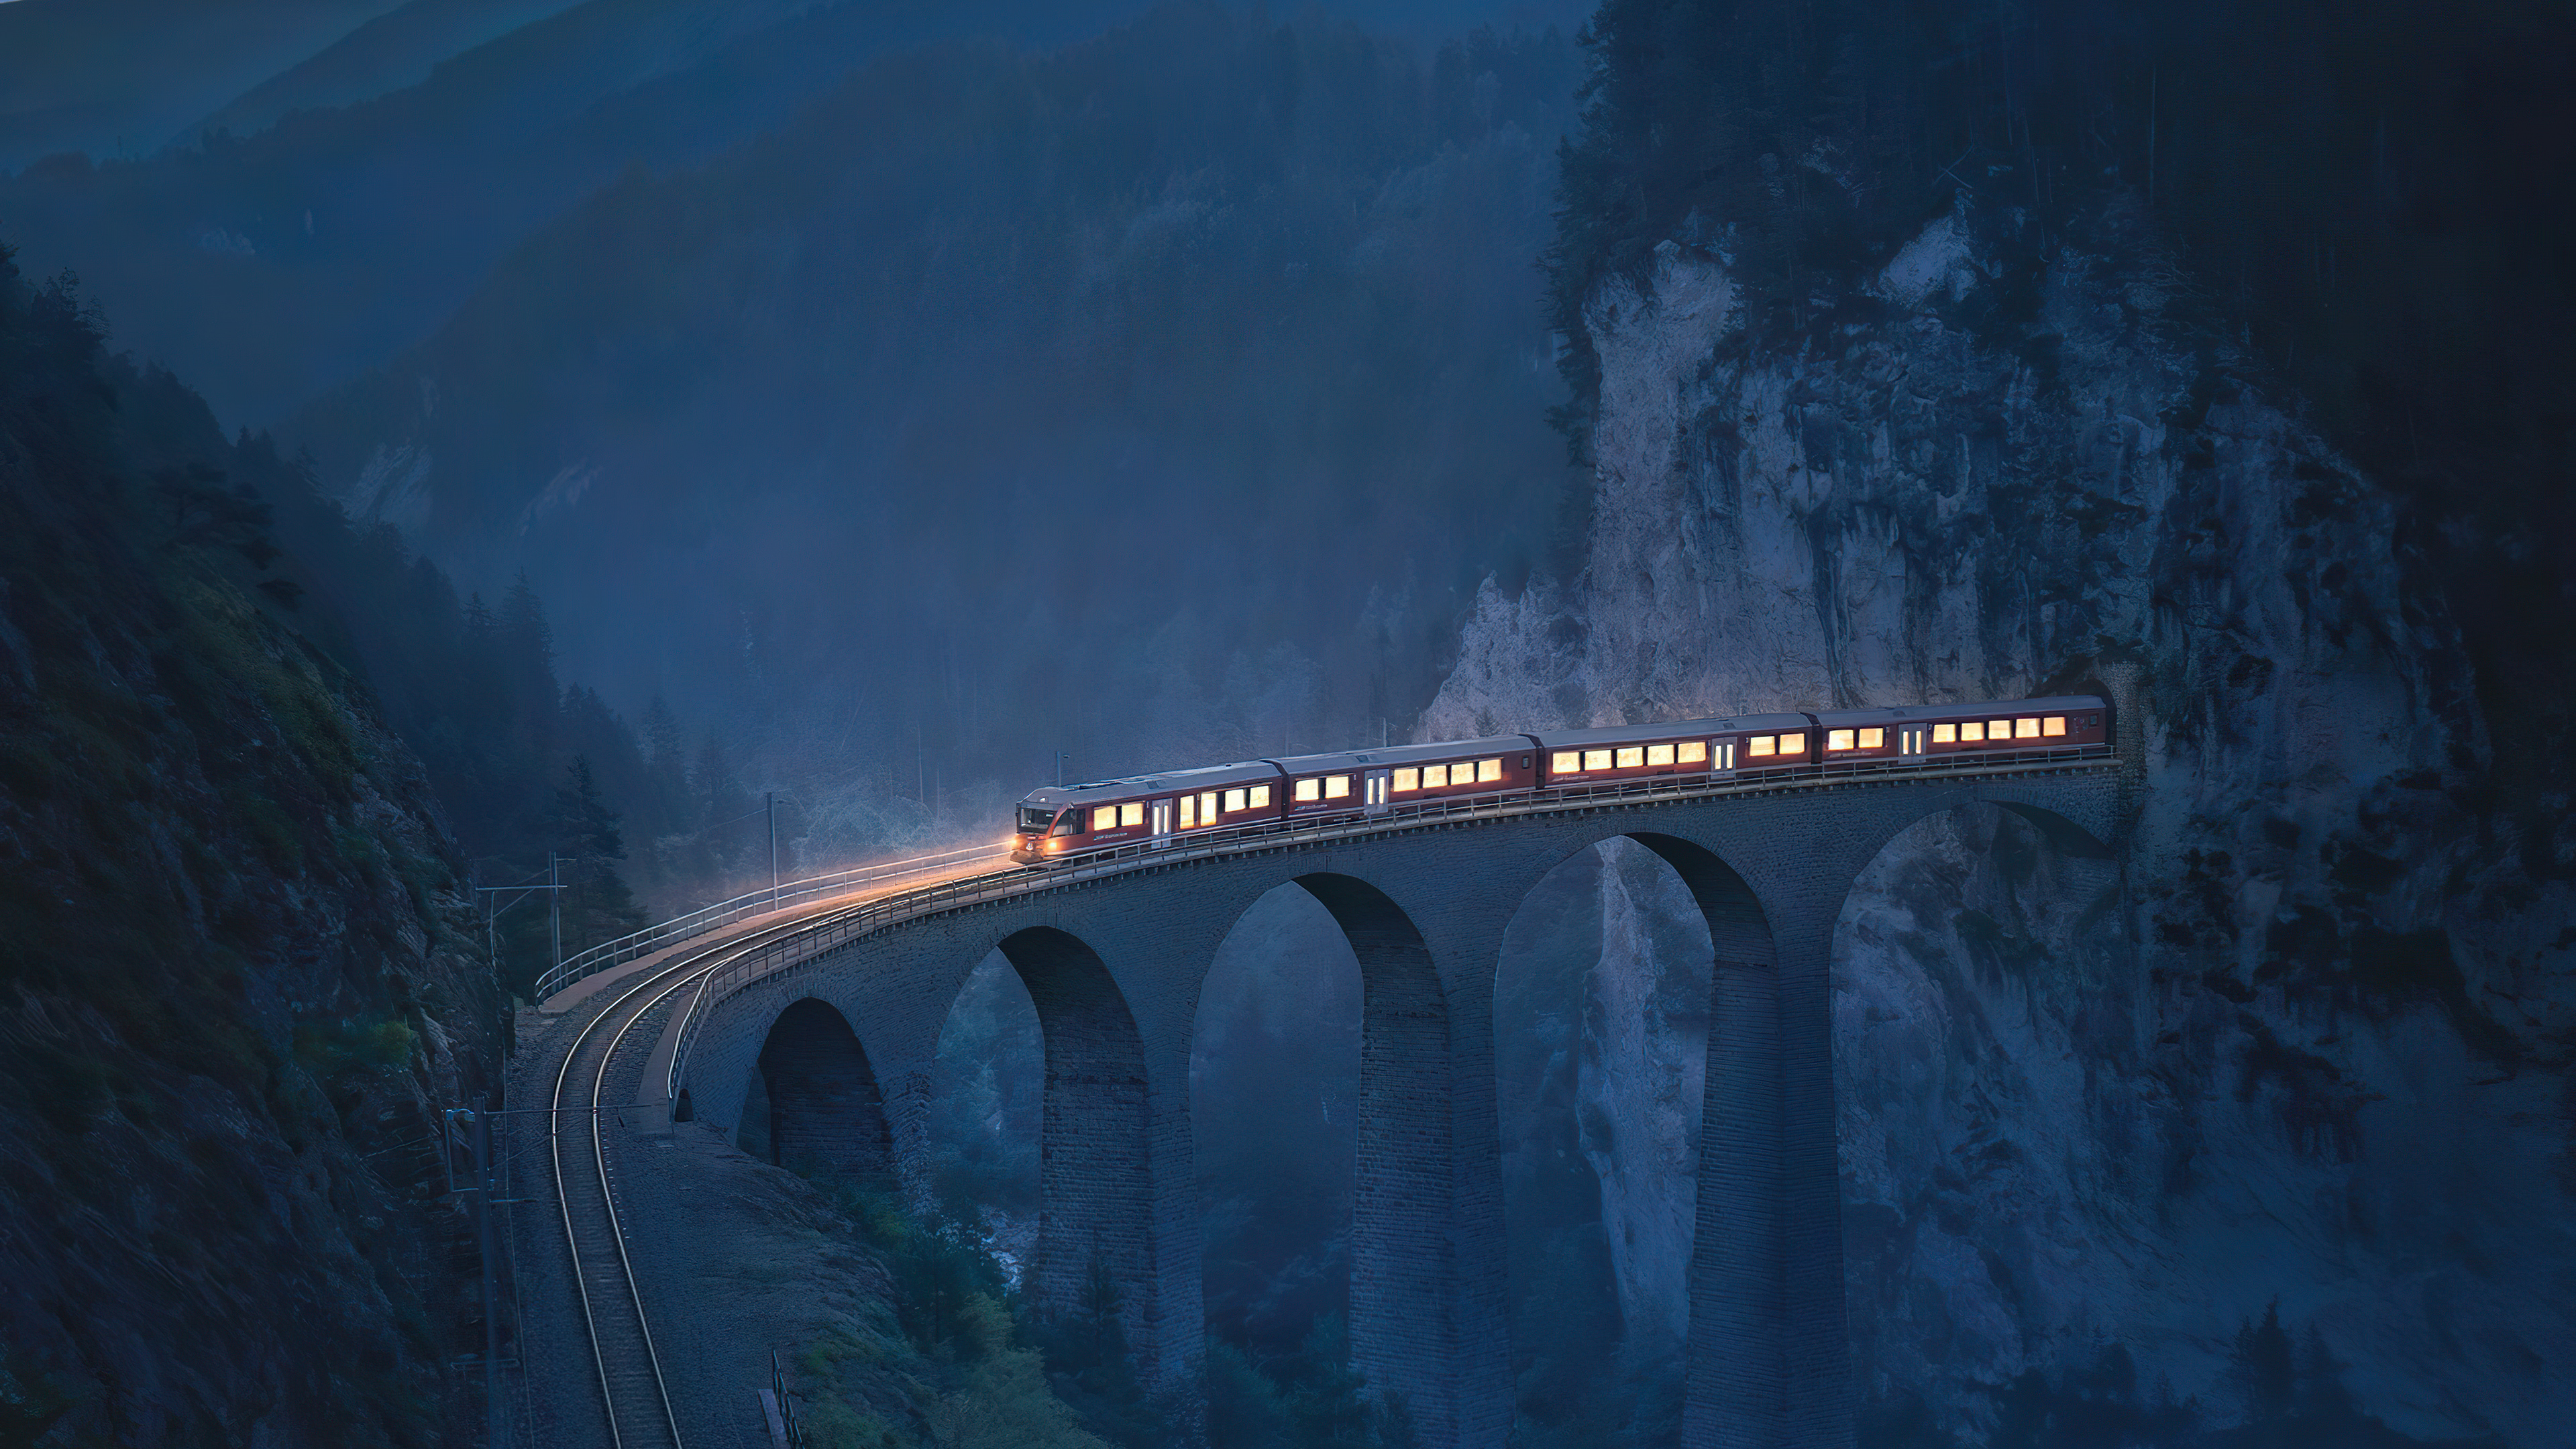 Train emerging from a tunnel by Julius Kähkönen